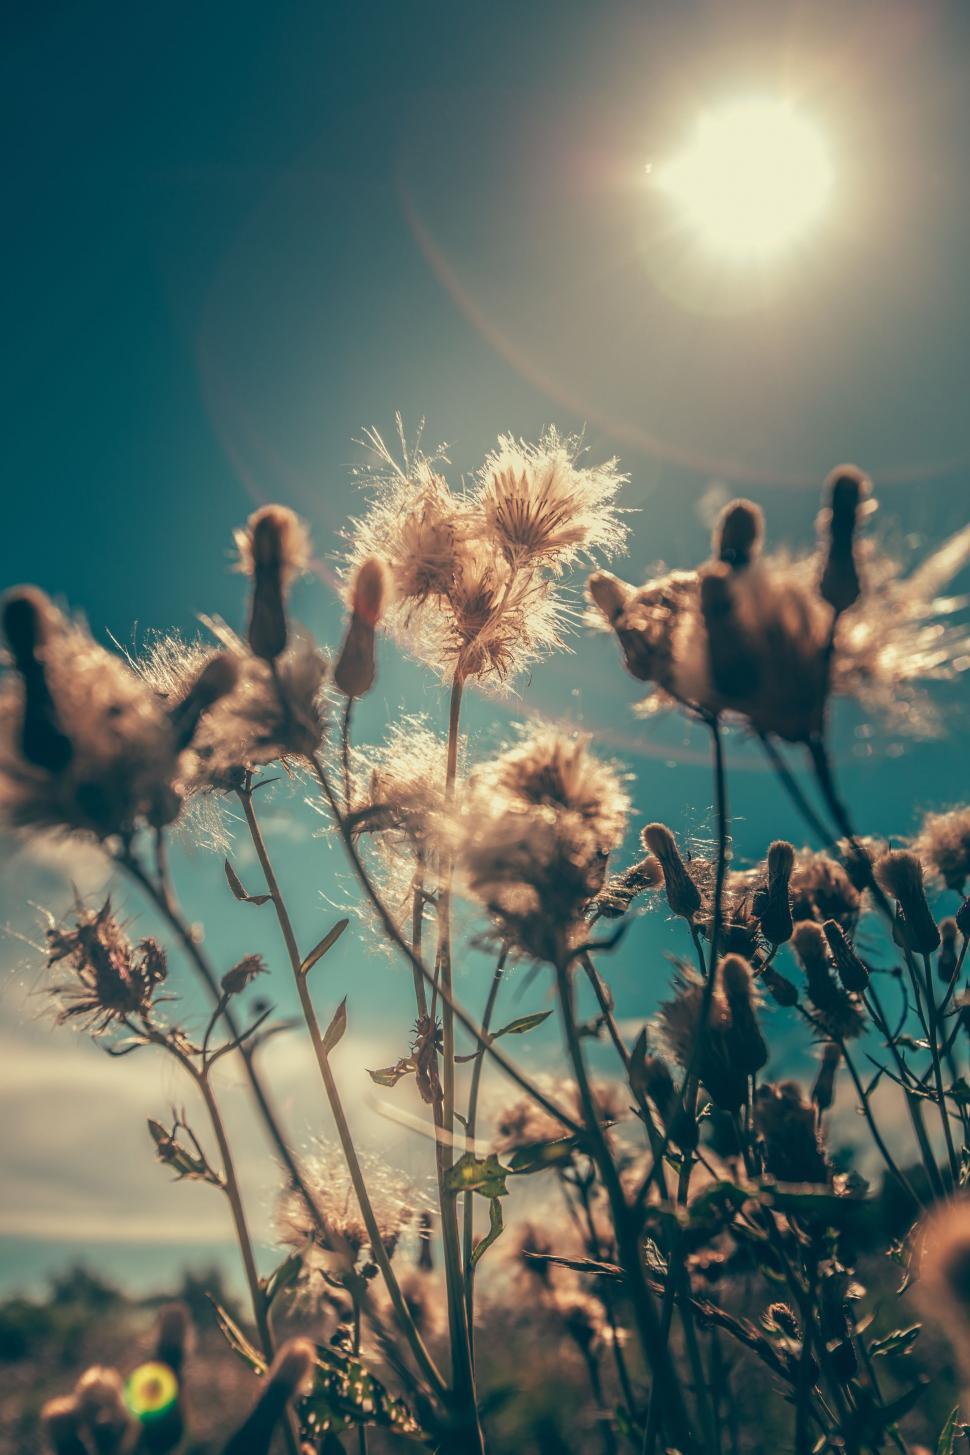 Free Image of Dandelions and Sun Glare  